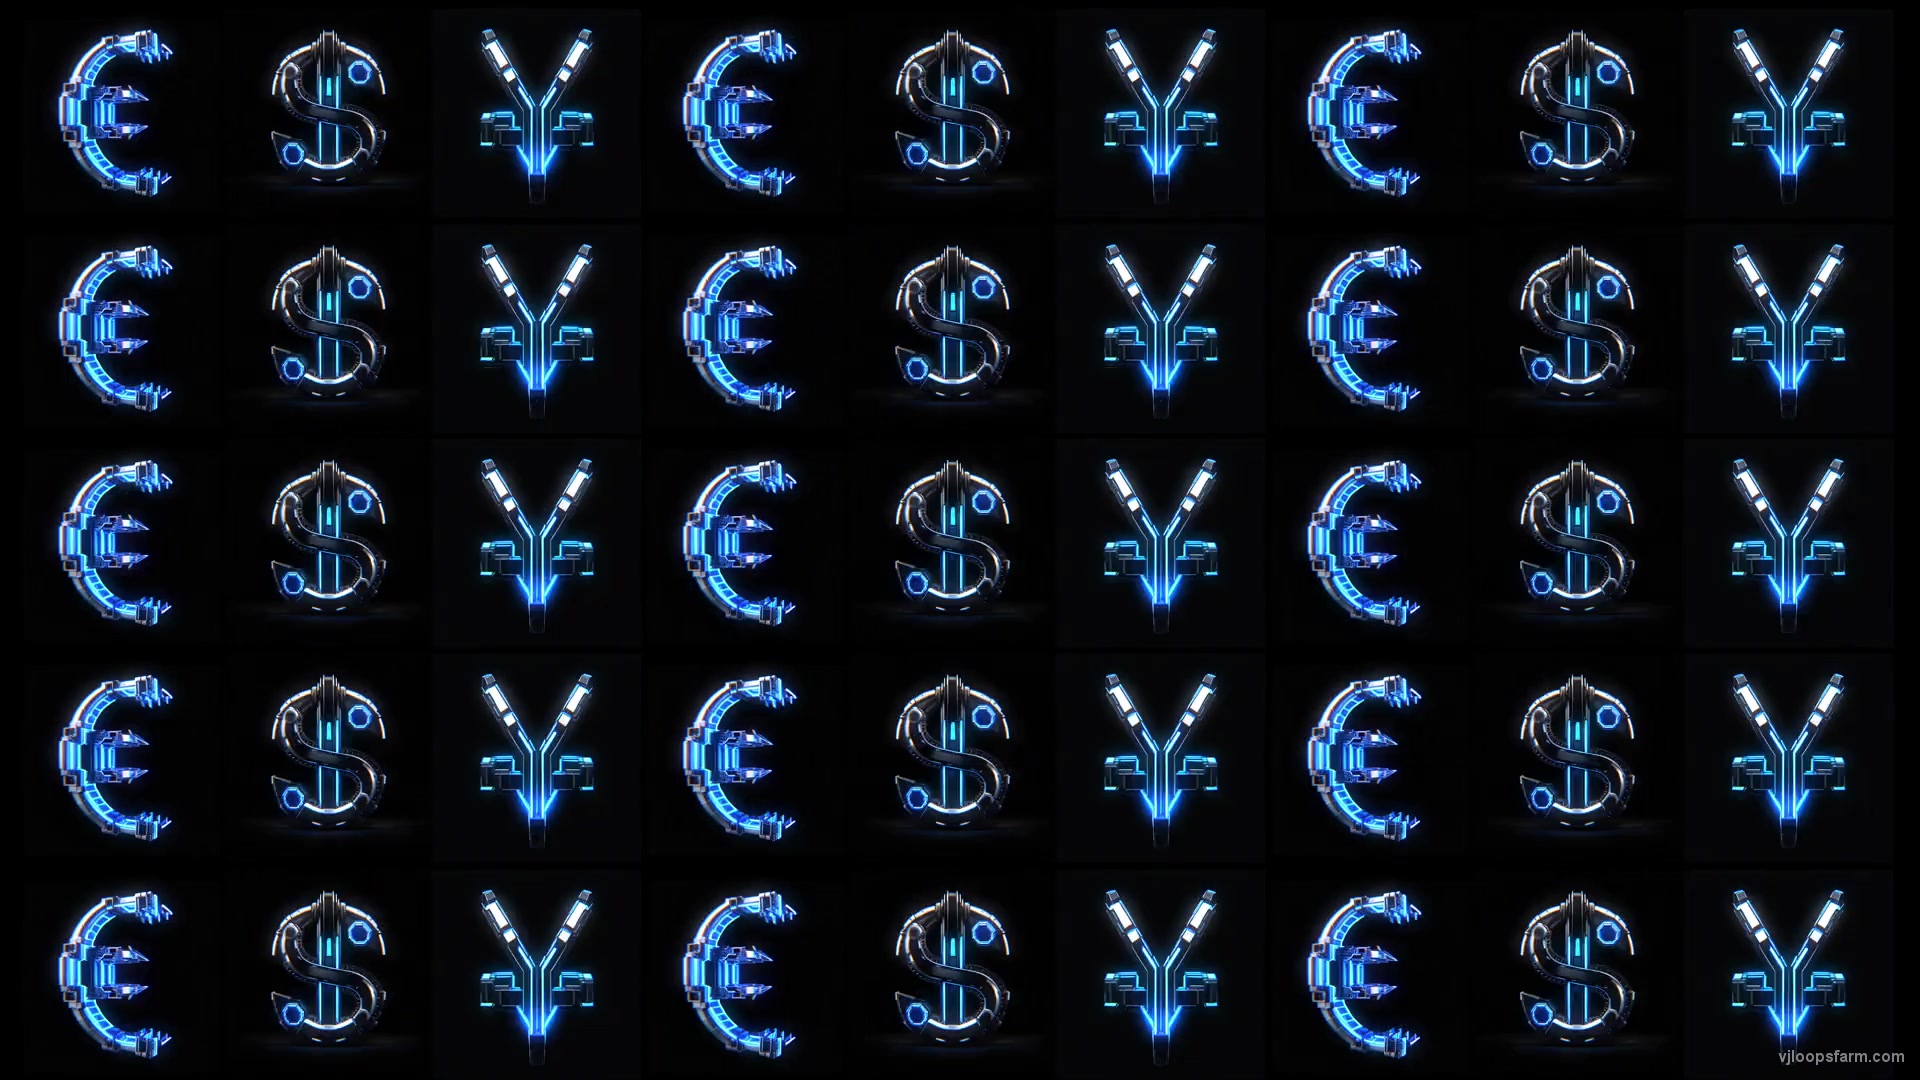 Cyberpunk EUR USD YUN Currency Signs Random Columns Pattern Video Motion Background